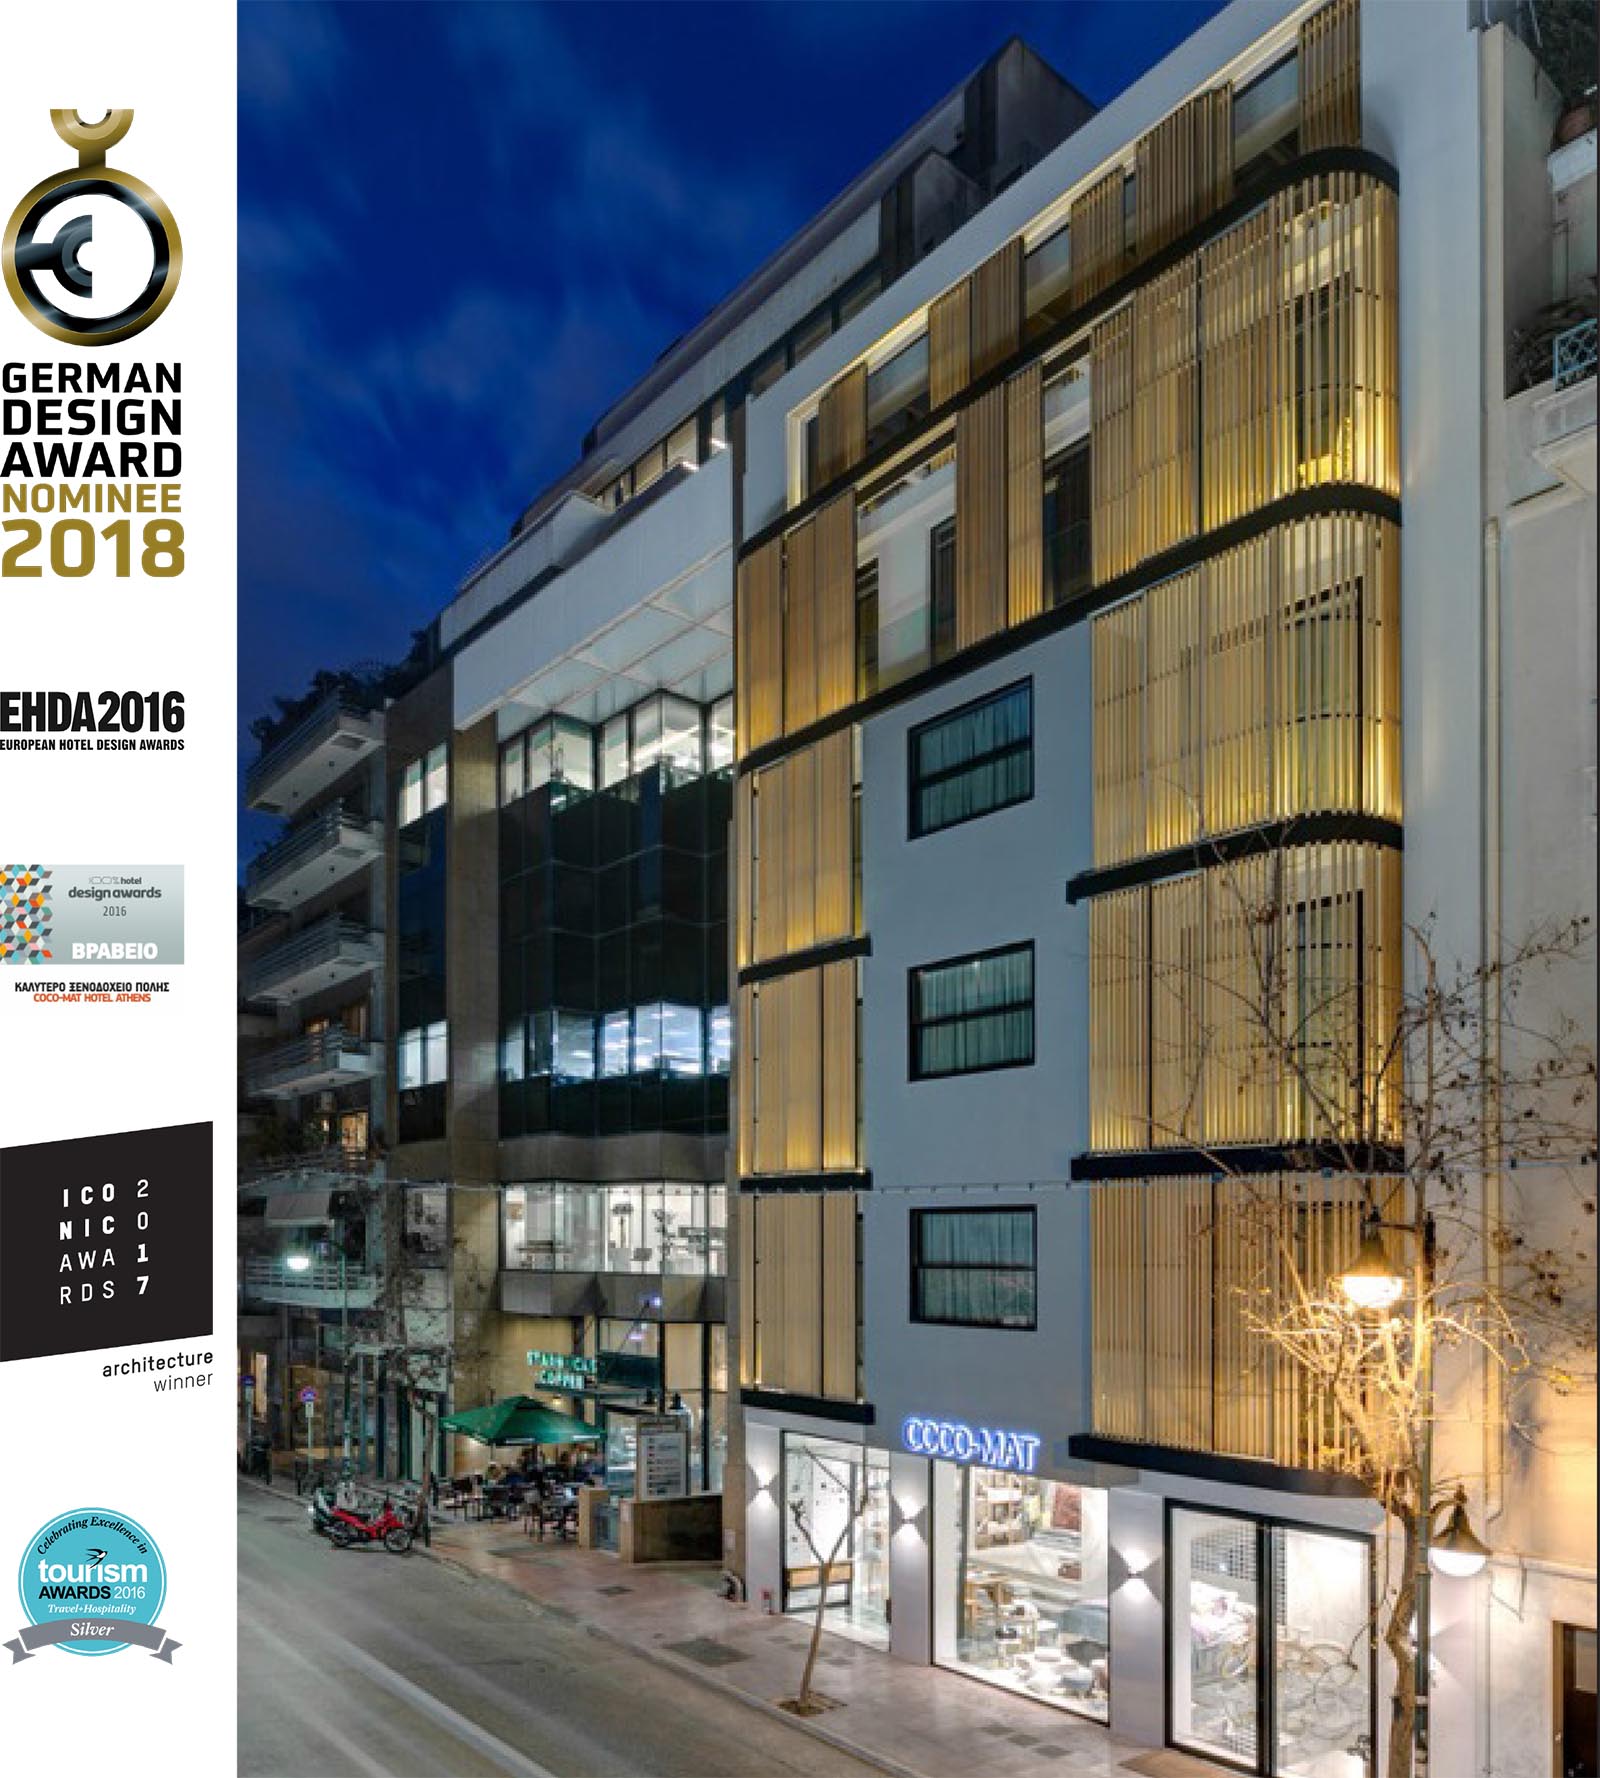 COCO-MAT Hotel Athens, Elastic Architects, Iconic Awards 2017, Architecture, German Design Awards 2018